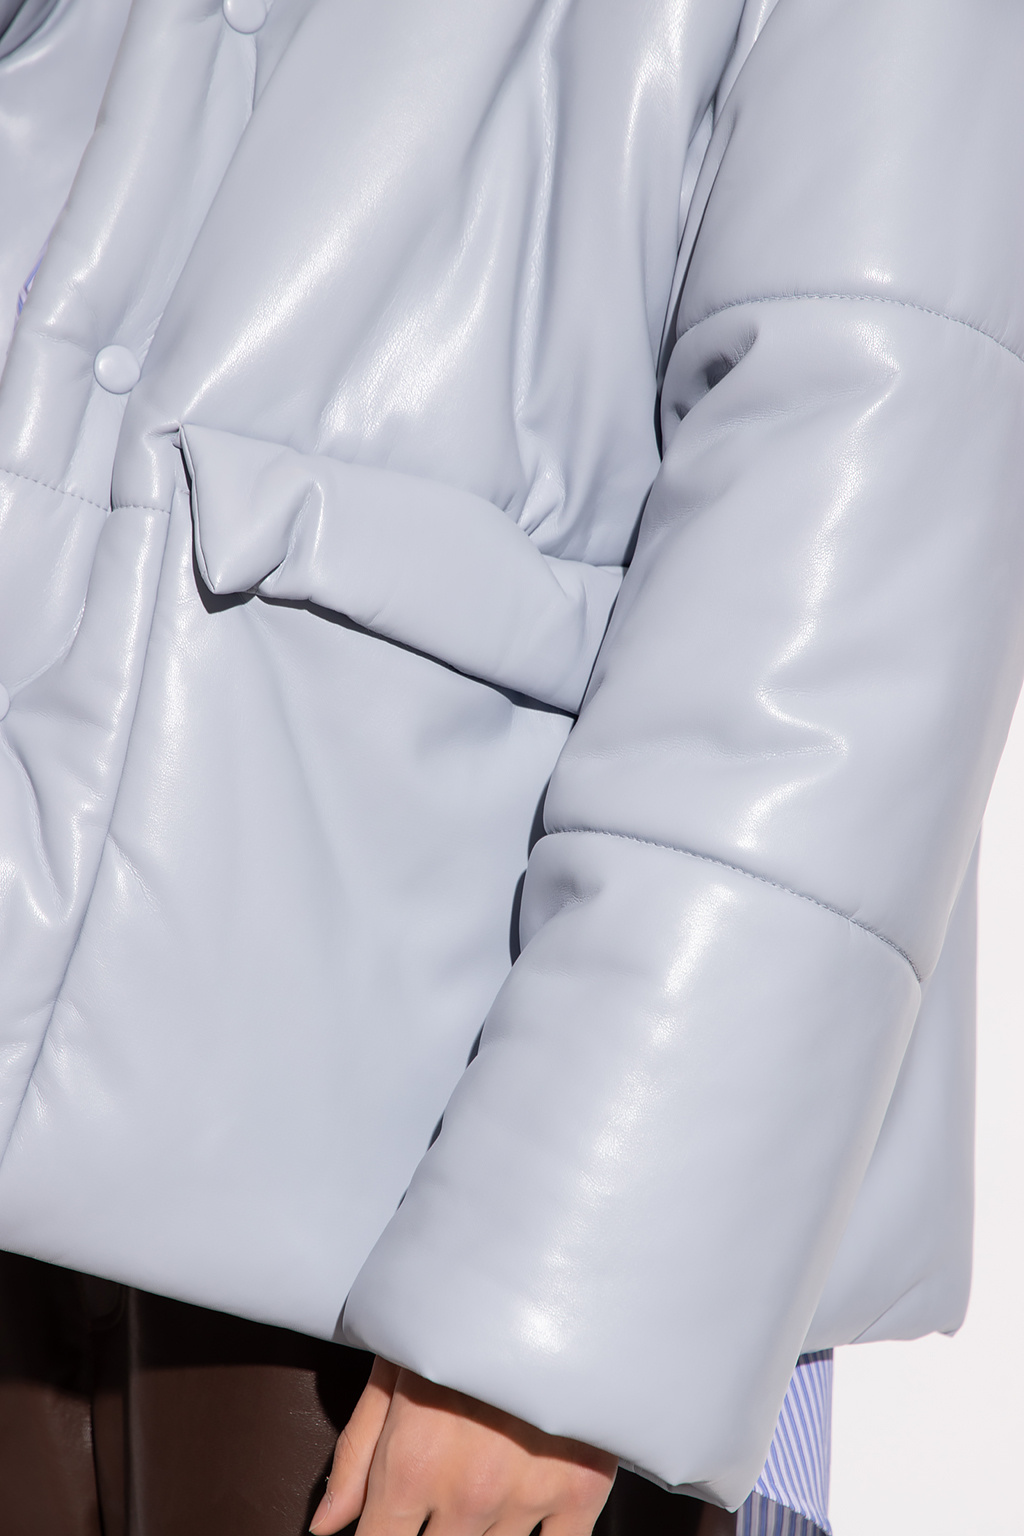 Nanushka ‘Hide’ insulated jacket in vegan leather